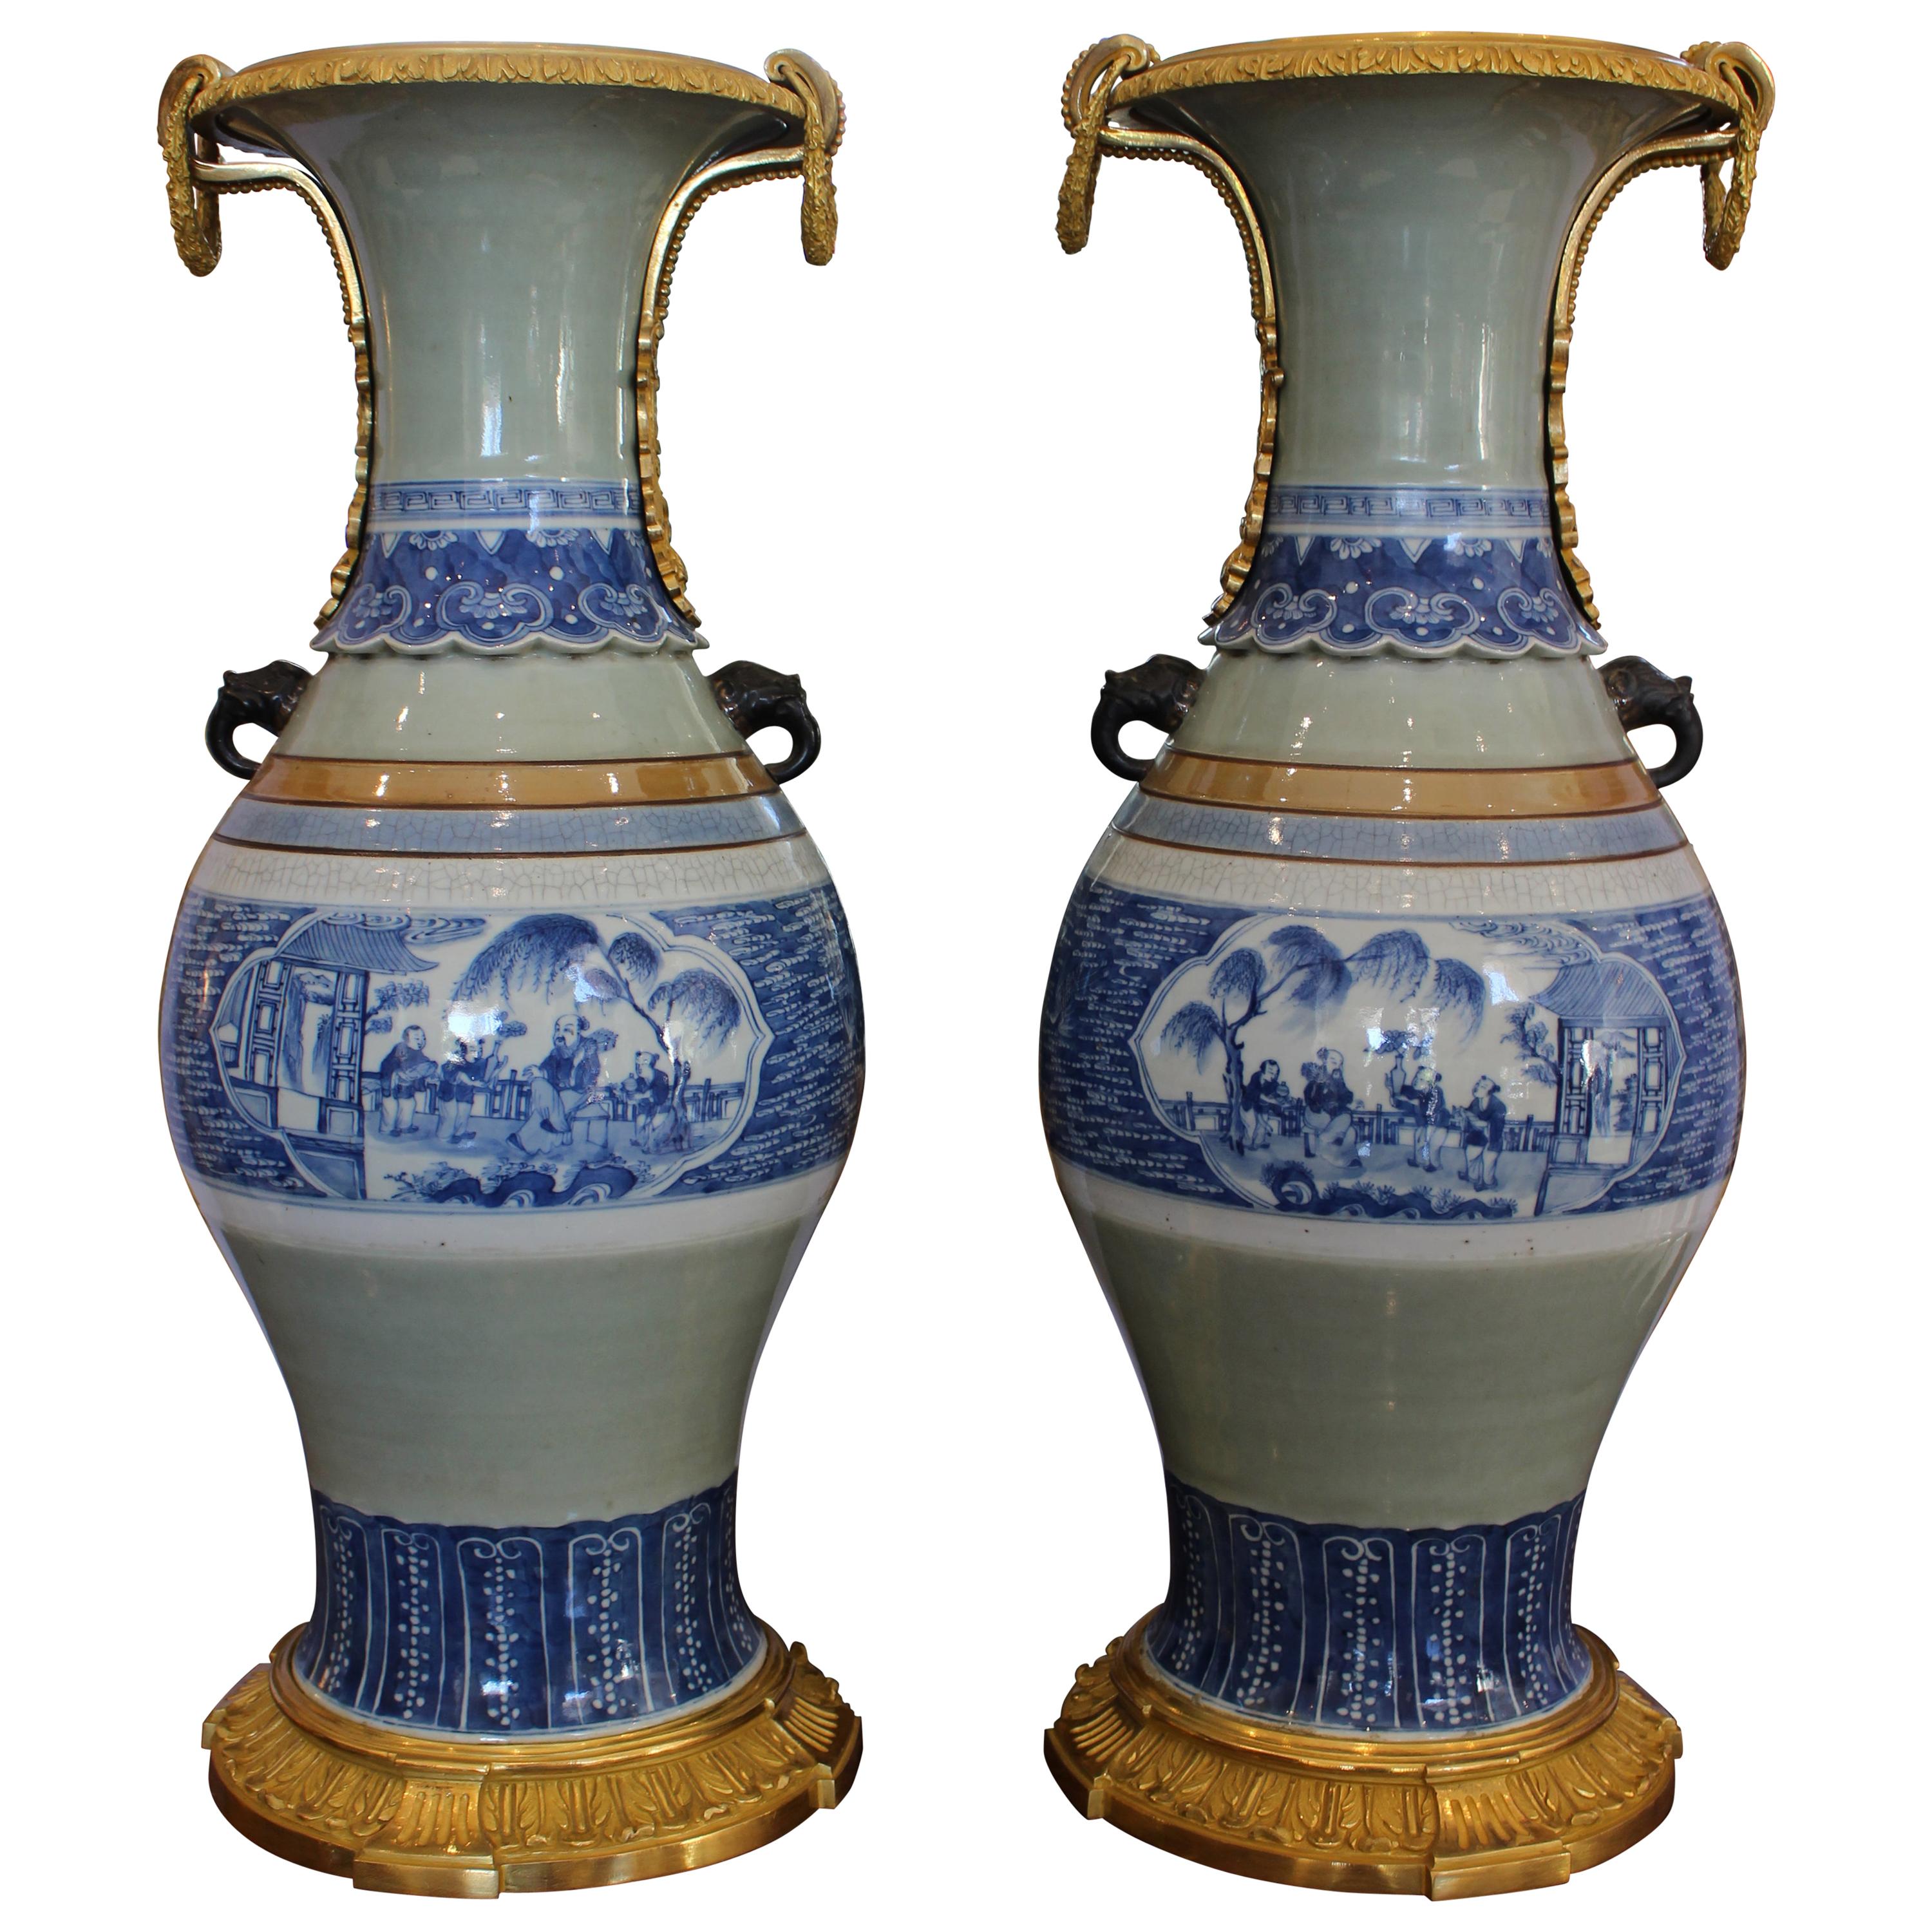 Large Pair of Ormolu-Mounted Chinese Celadon-Glazed Blue and White Vases